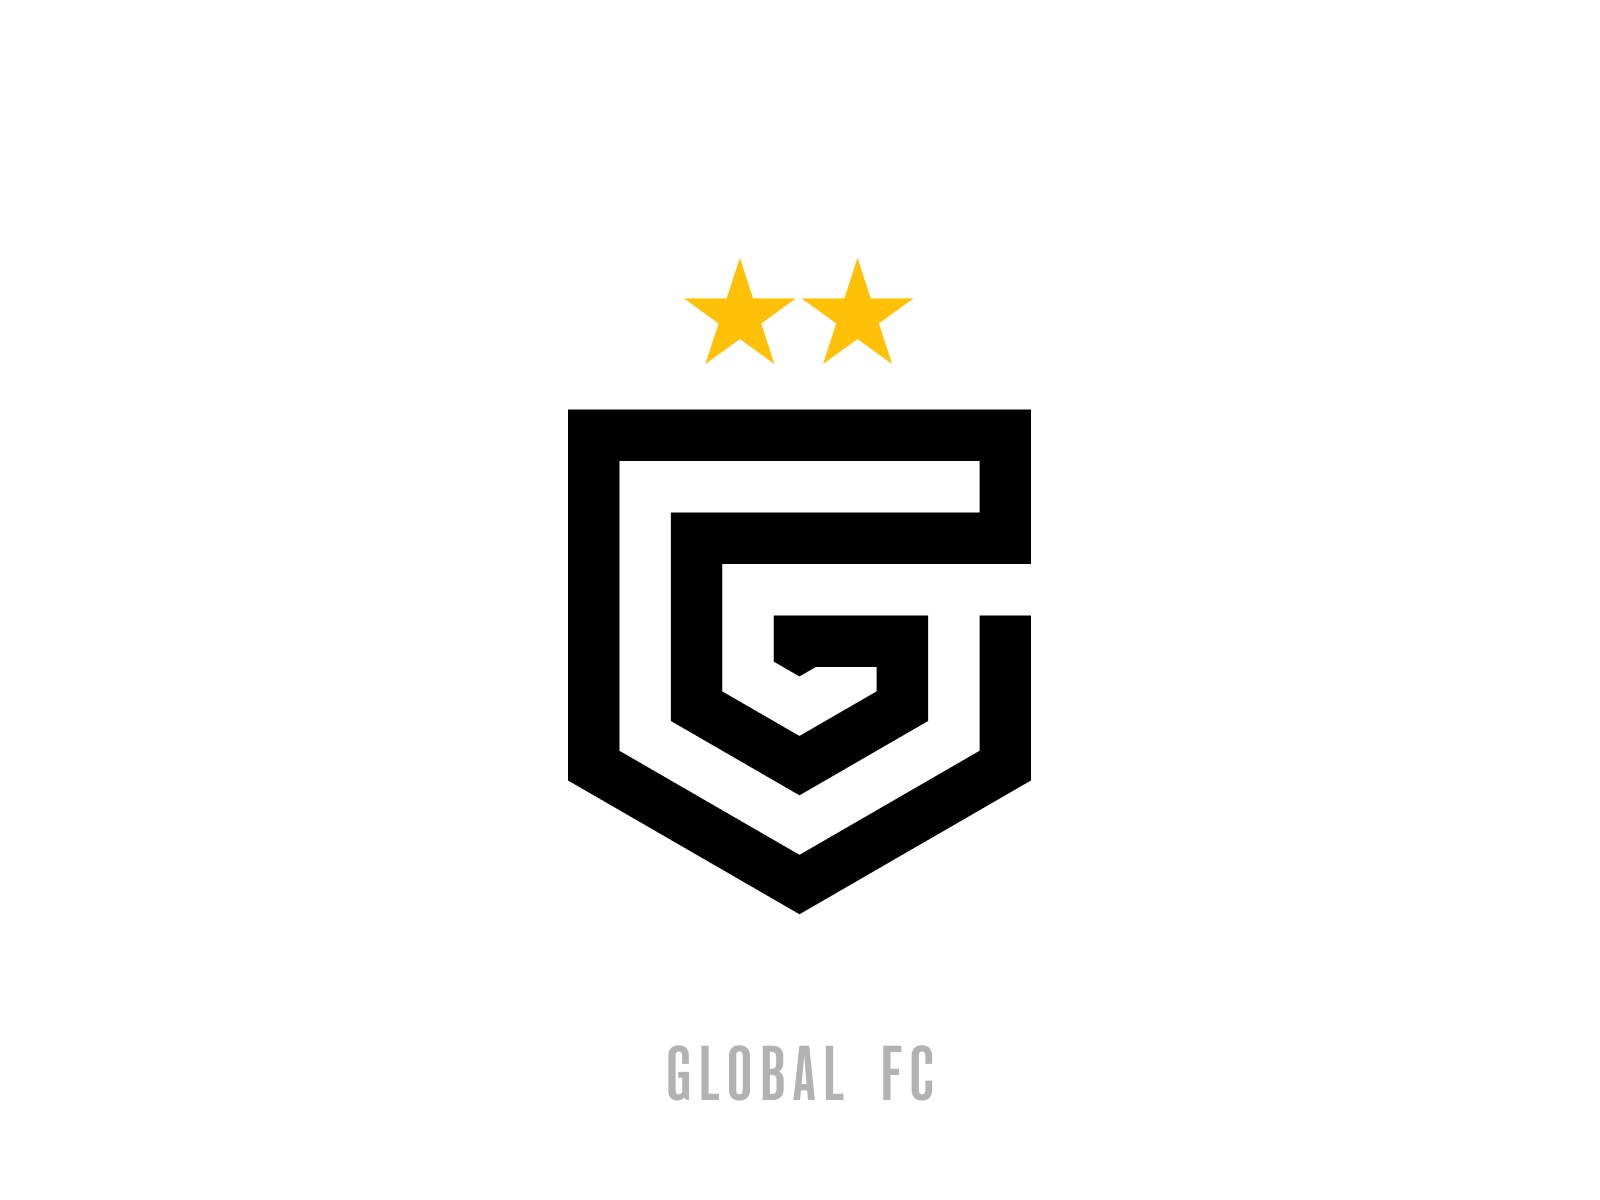 Global FC - Football Club Logo by Jakub Plas on Dribbble